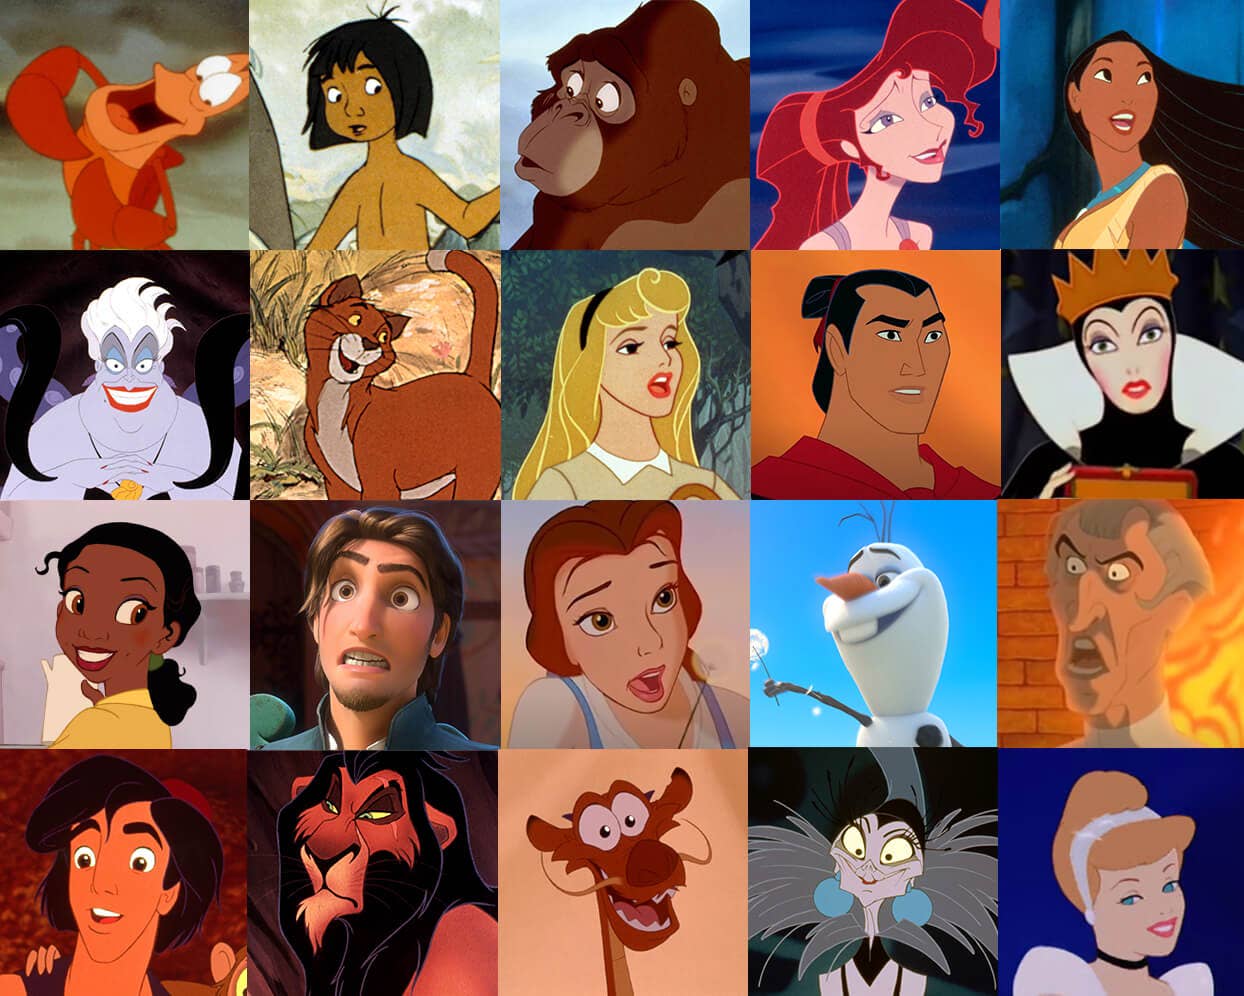 Disney Characters